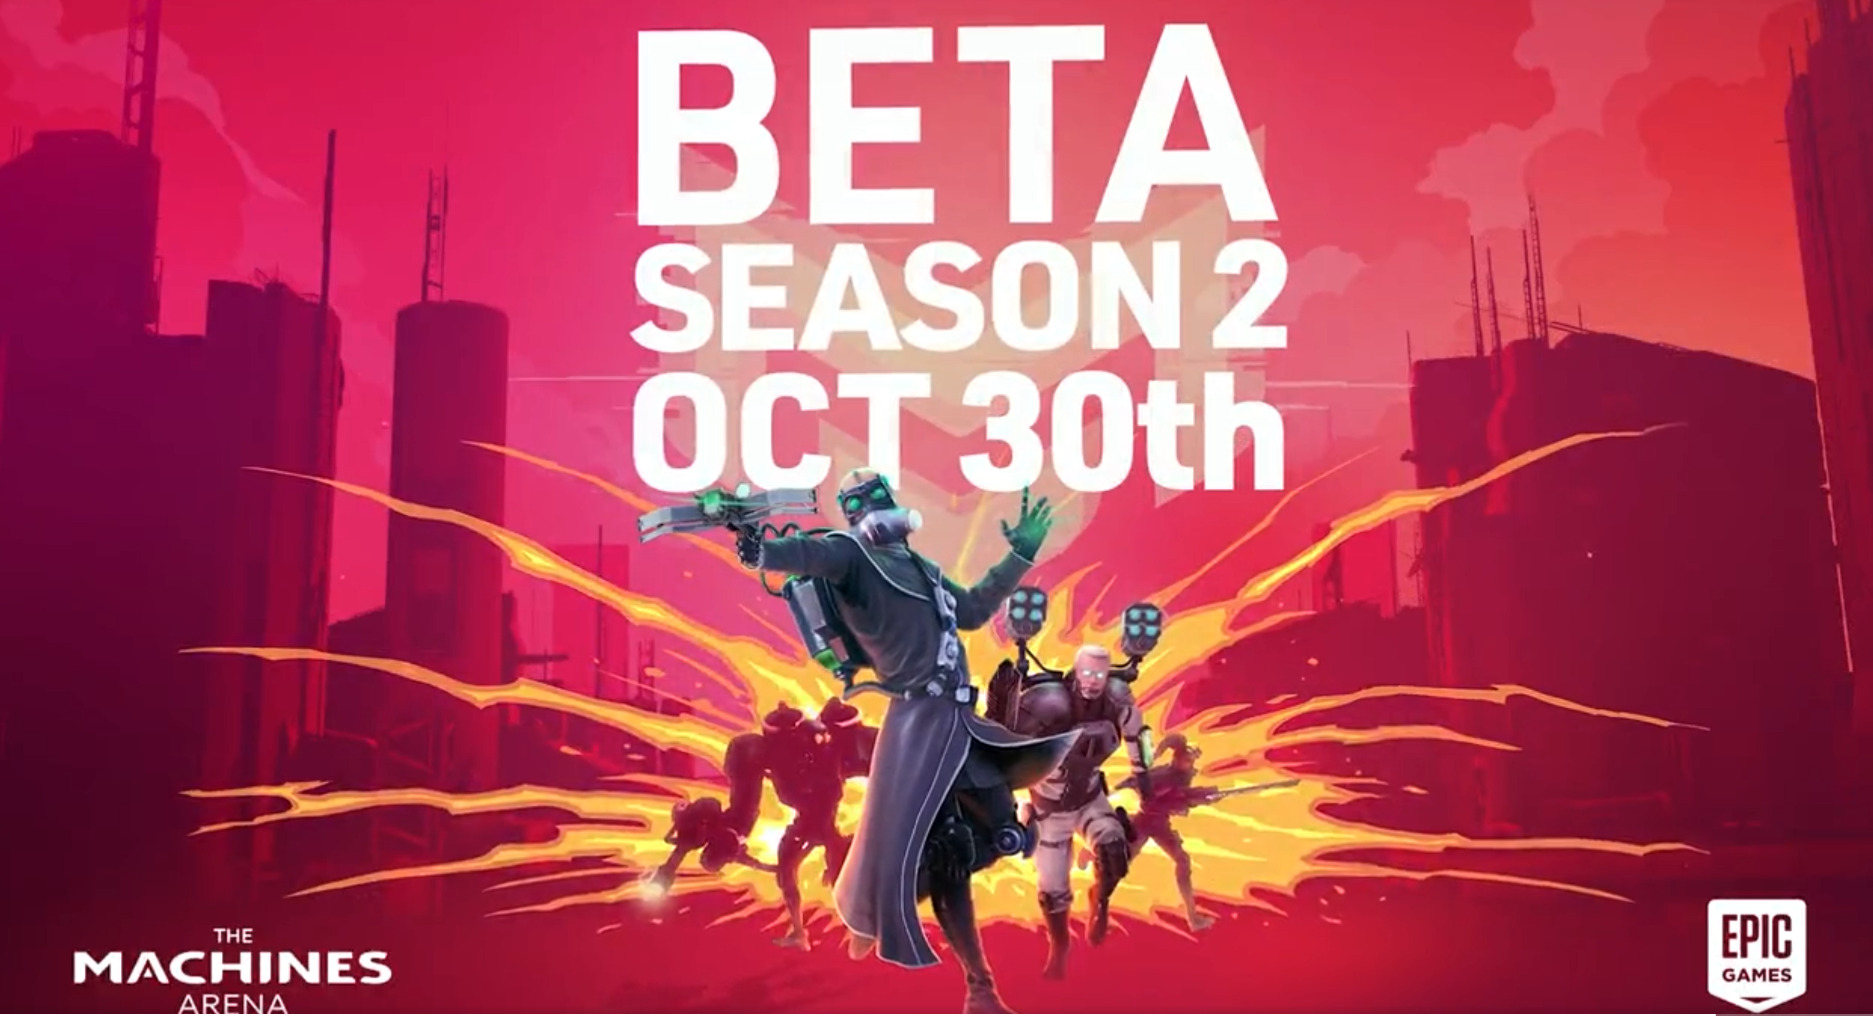 The Machines Arena beta season 2 banner